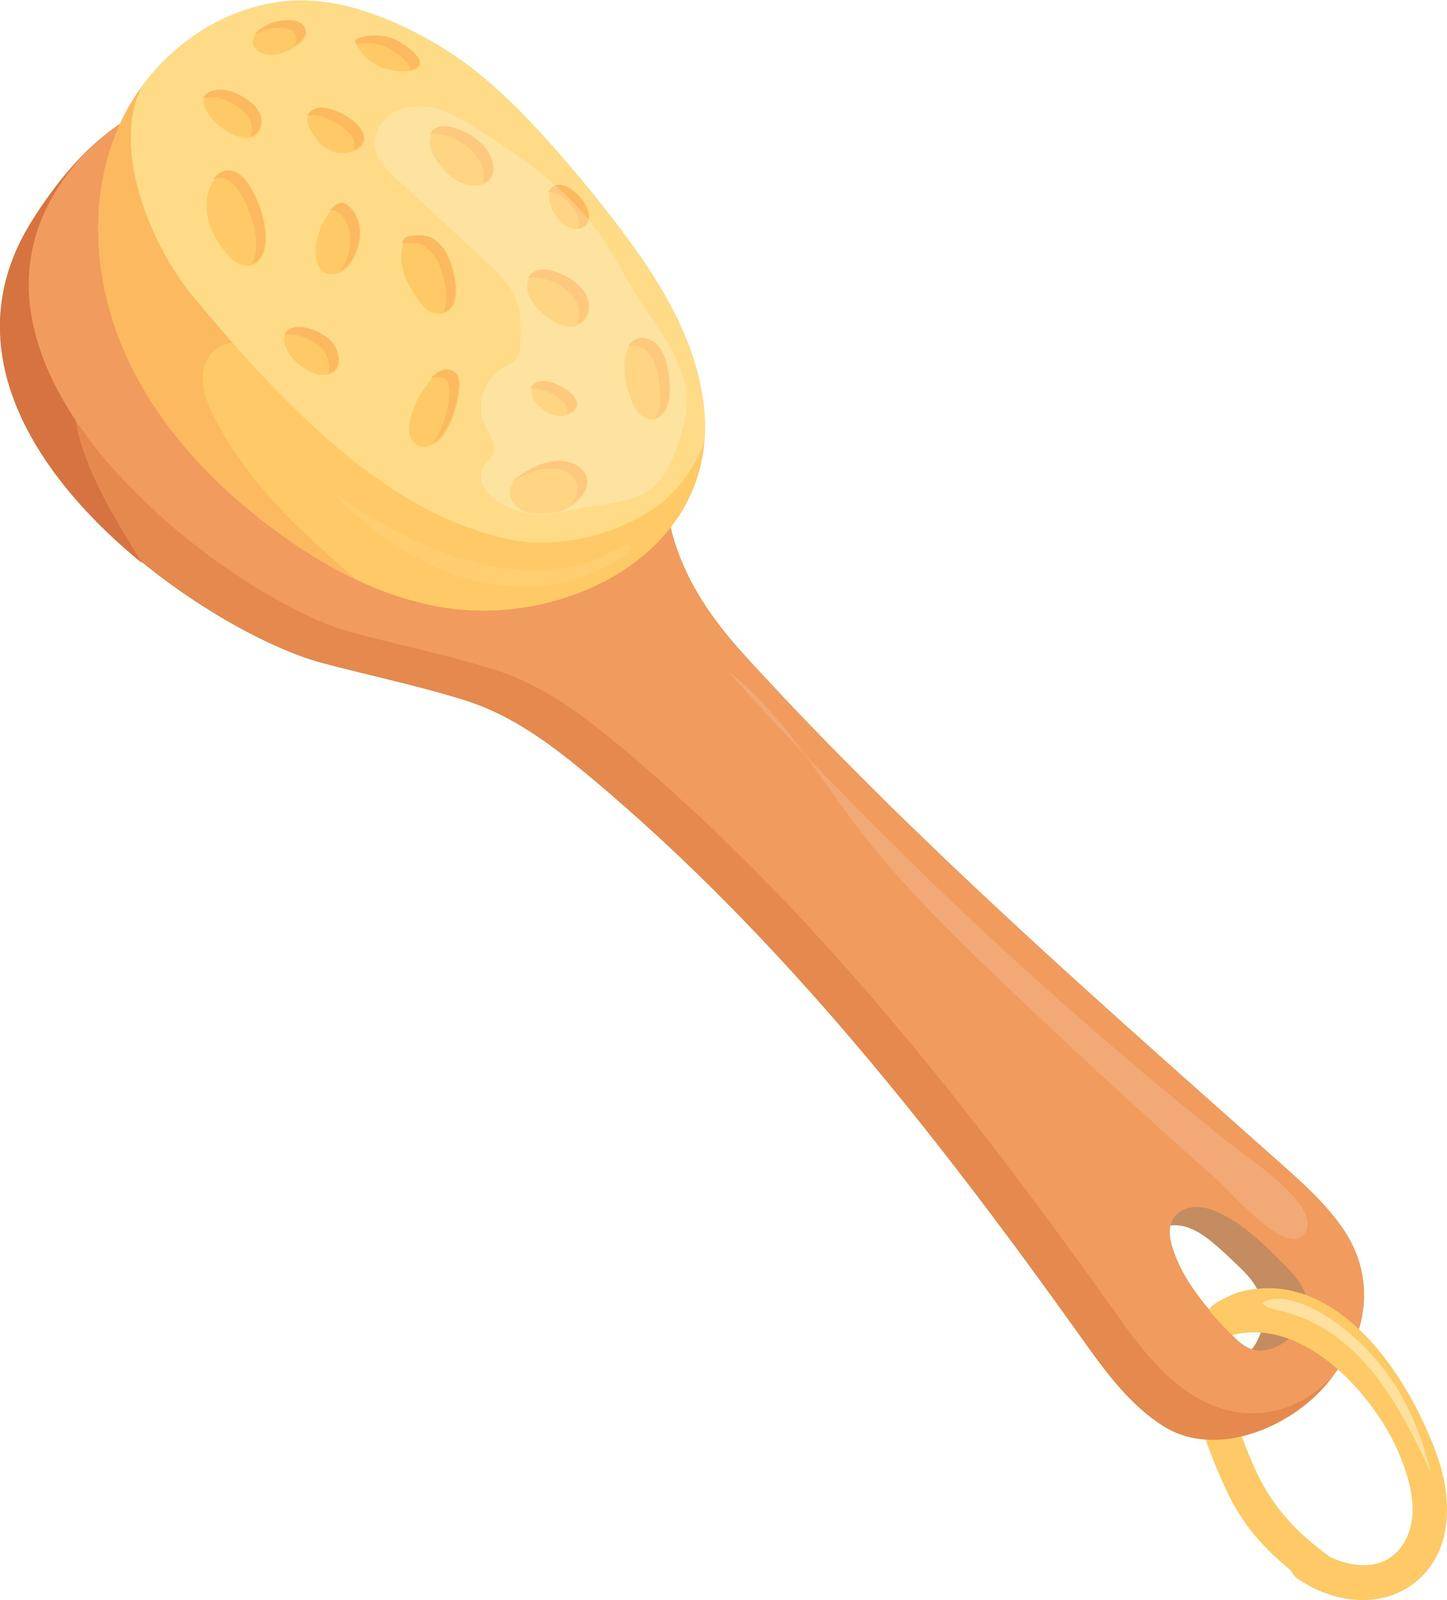 Sea sponge on wooden handle. Cartoon bath accessory isolated on white background